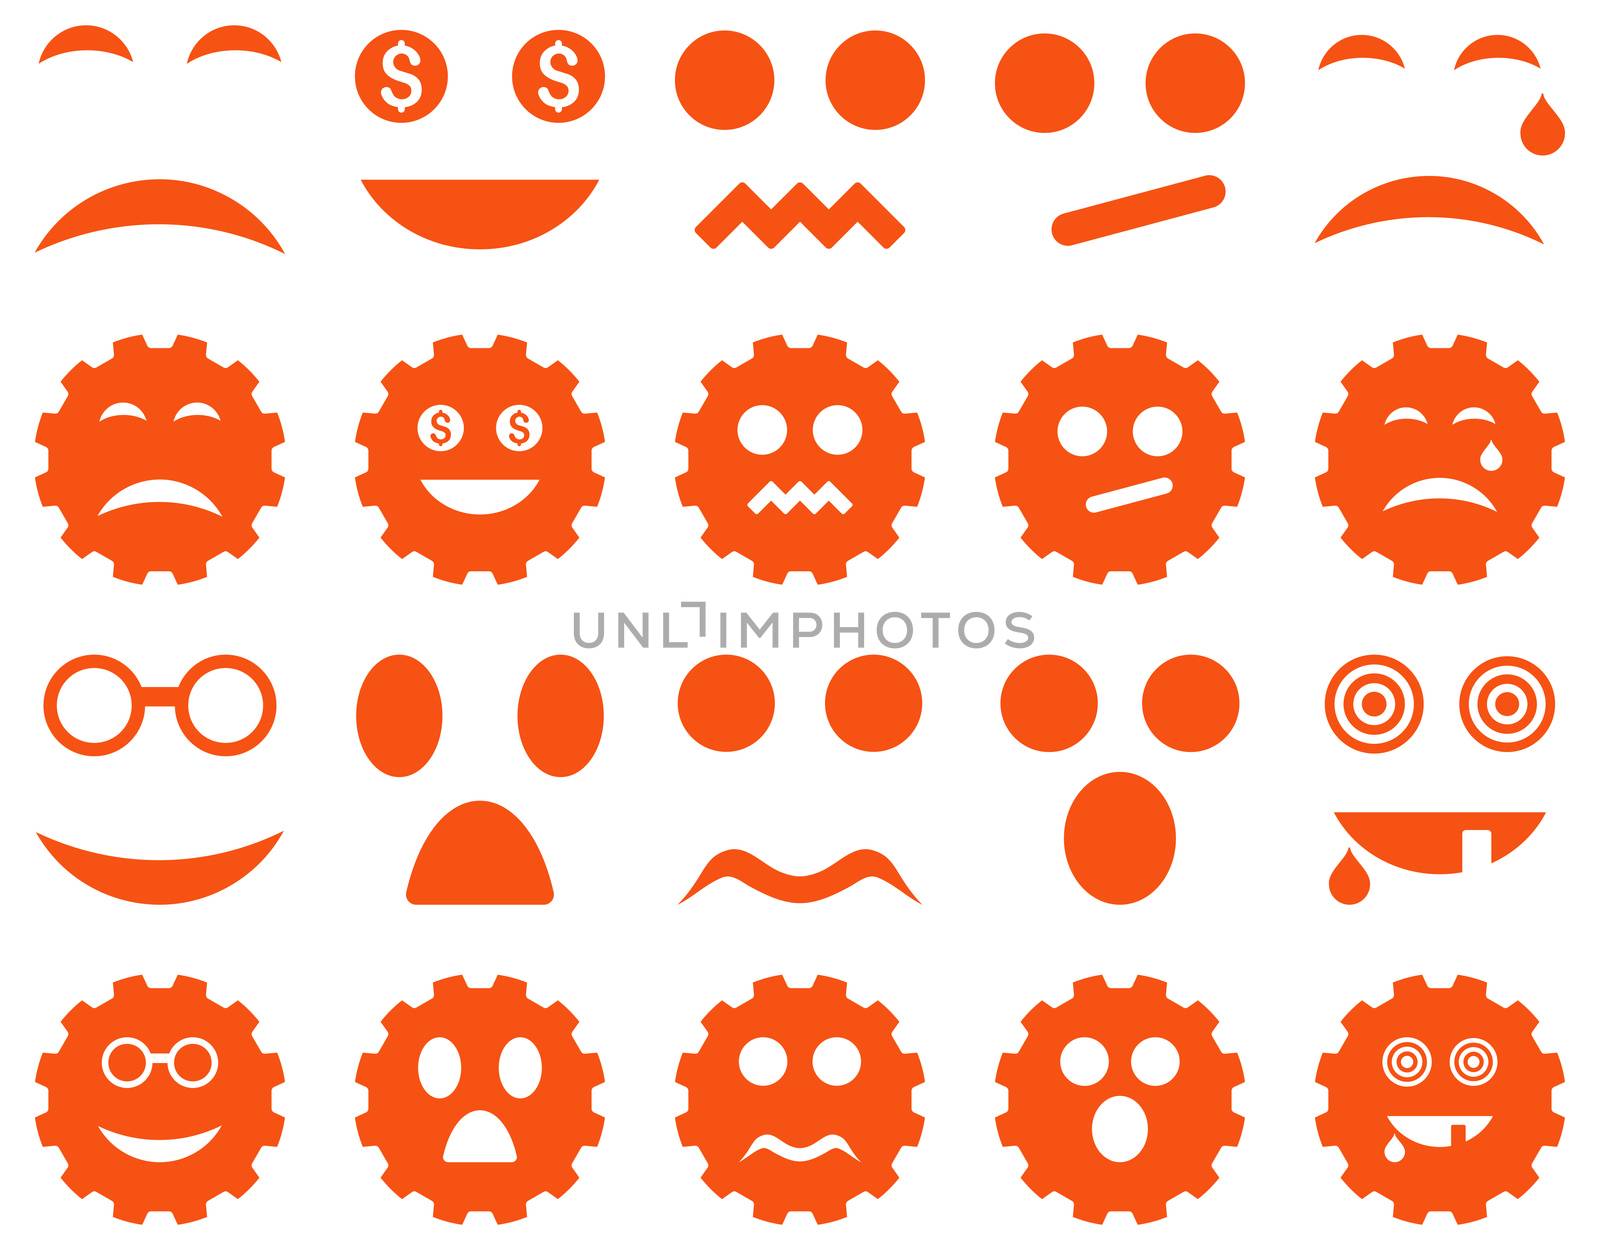 Tool, gear, smile, emotion icons. Glyph set style is flat images, orange symbols, isolated on a white background.